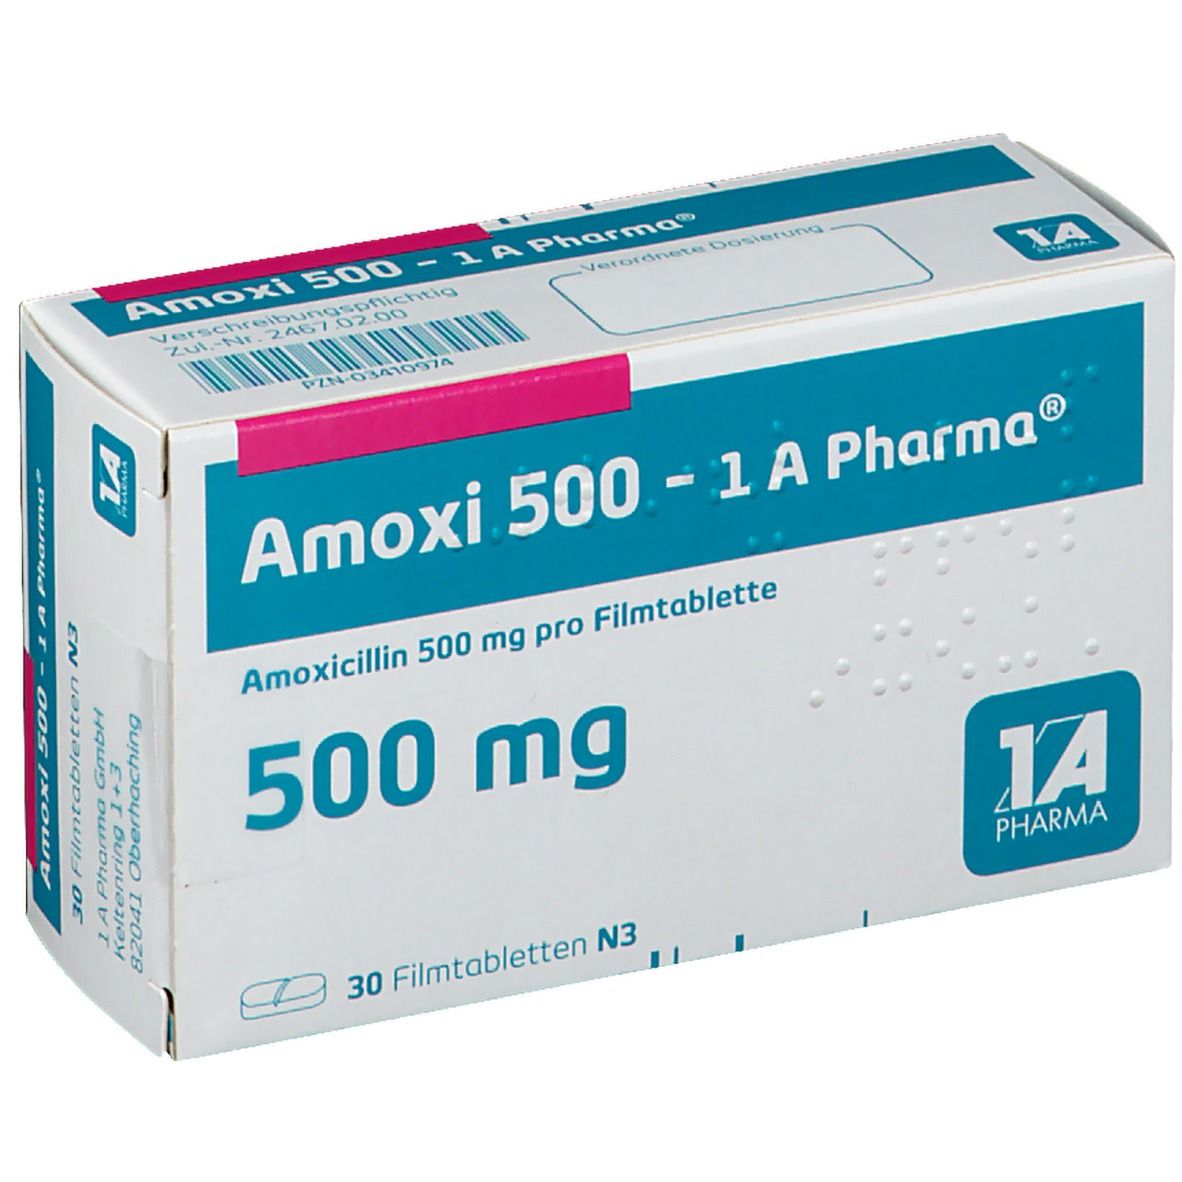 Amoxi 500 - 1 A Pharma®